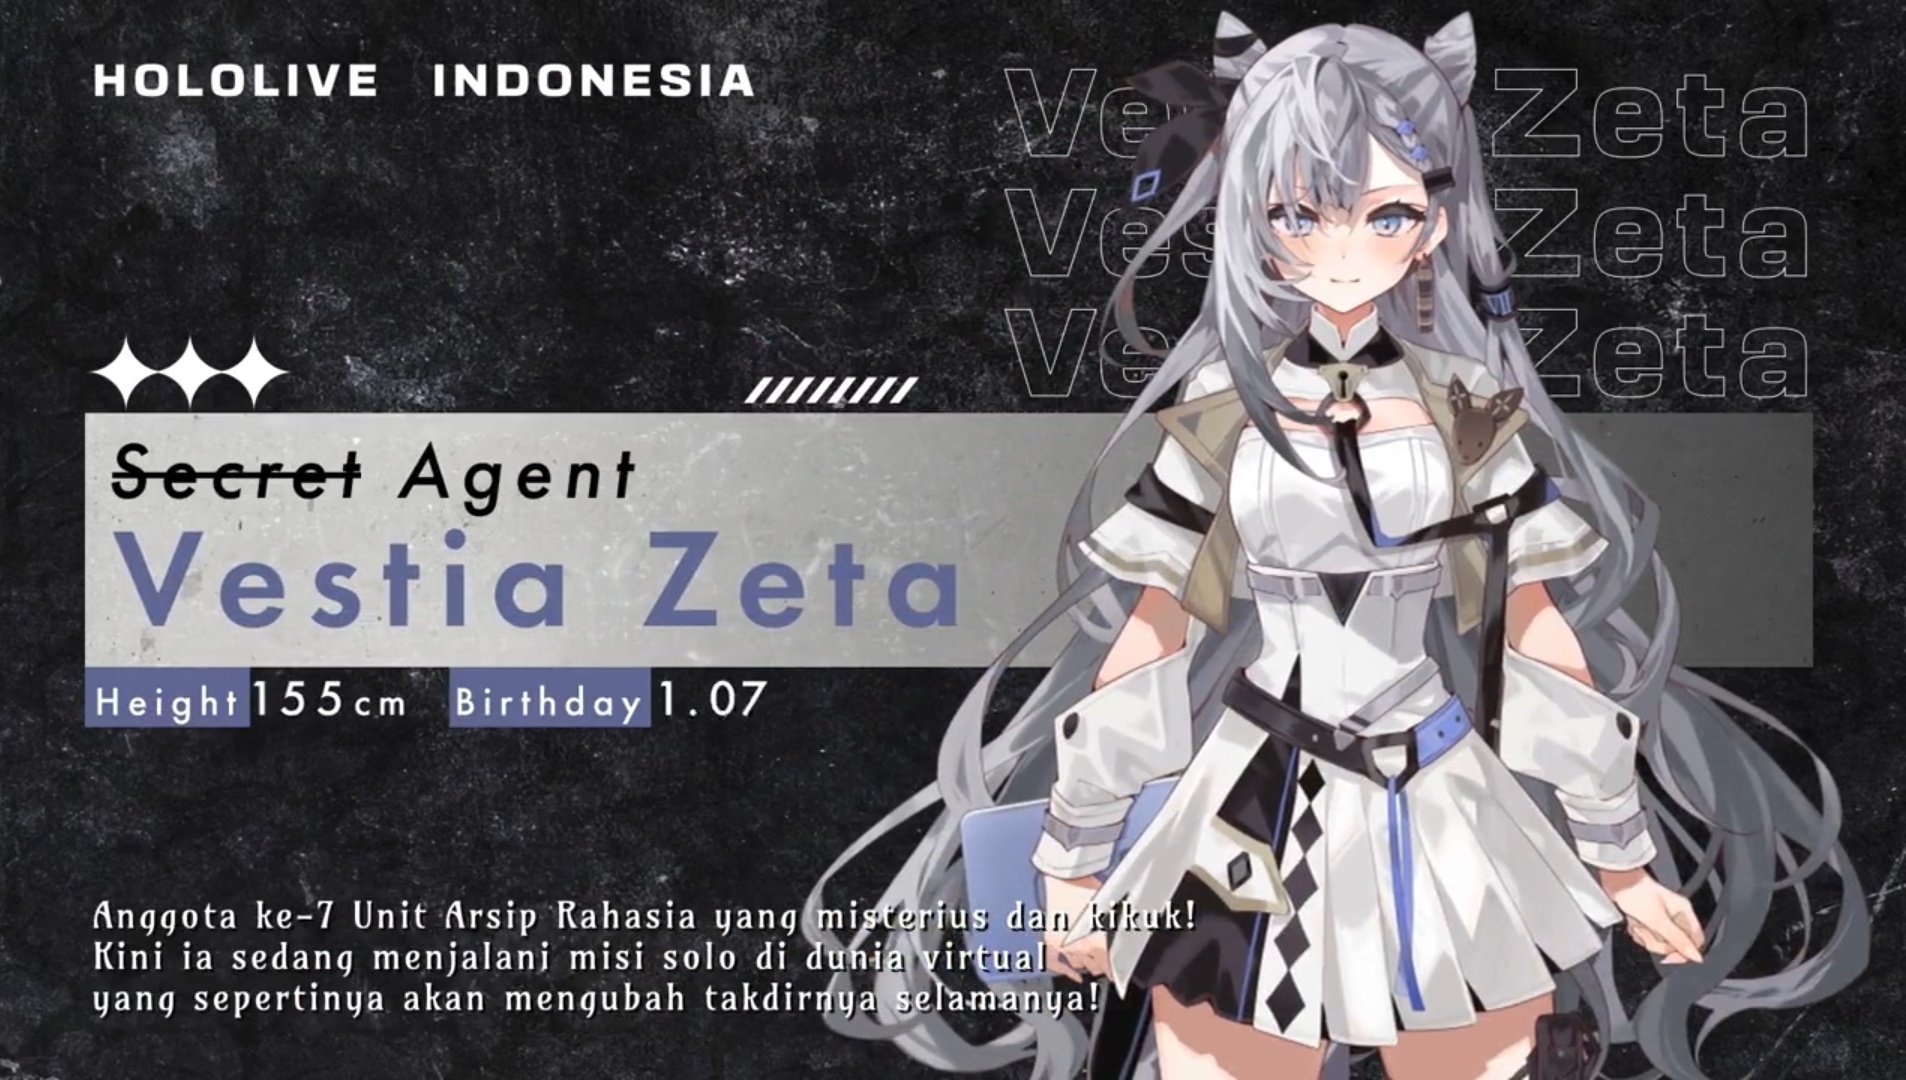 Vestia Zeta, Hololive Indonesia